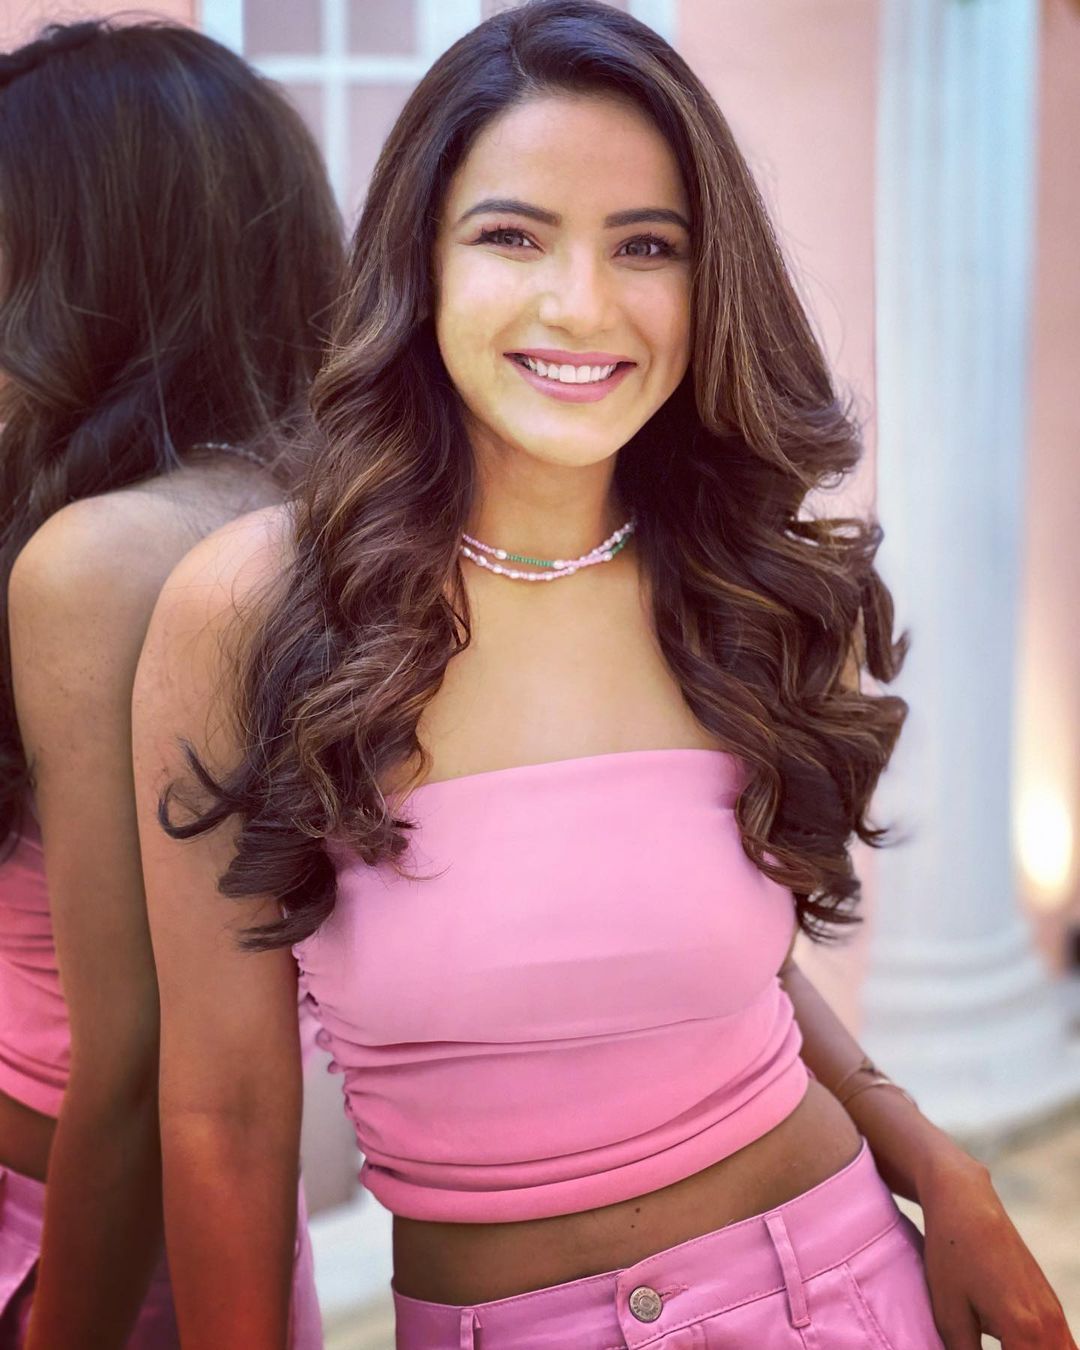 Jasmin Bhasin looks cute in the off-shoulder pink top.